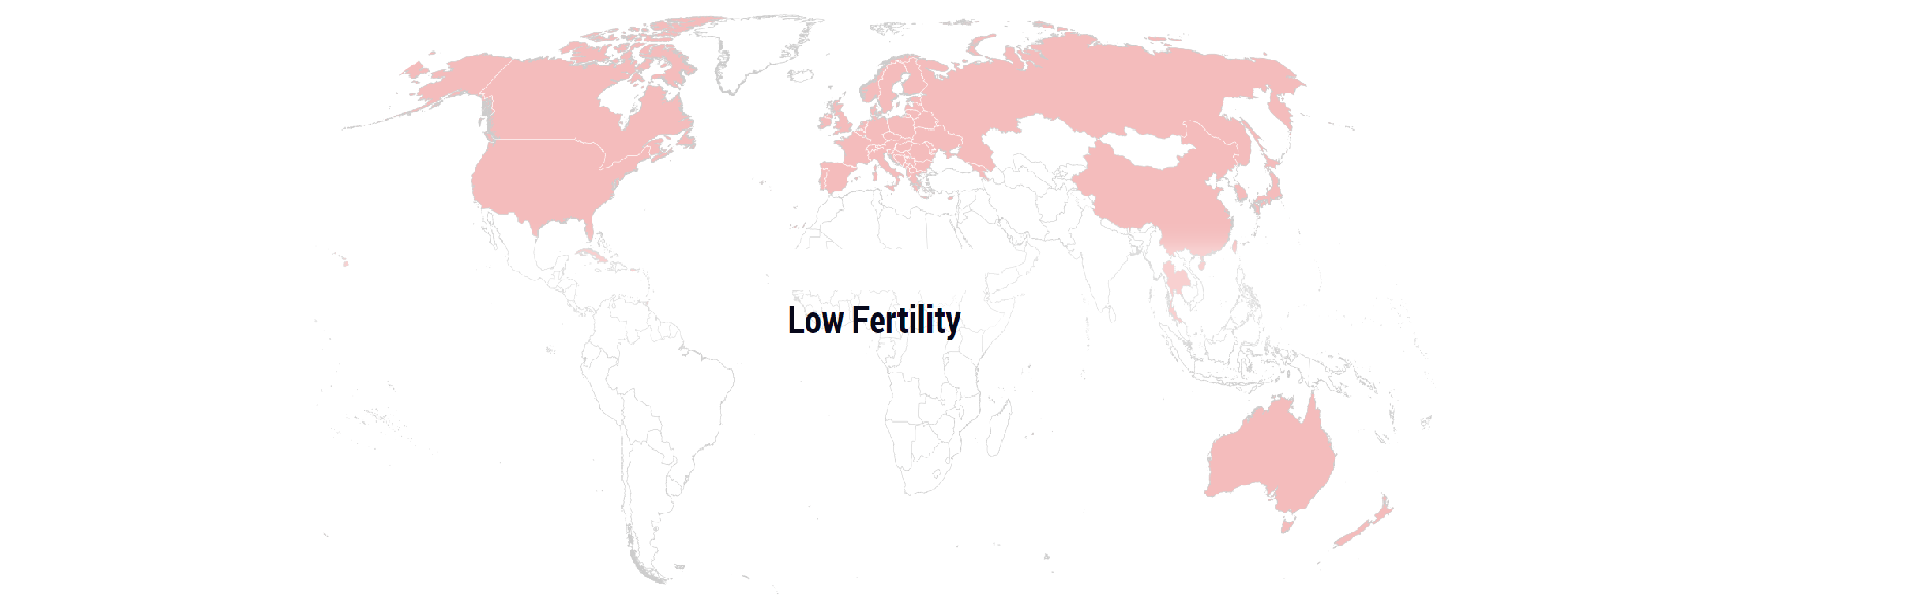 low fertility 2018